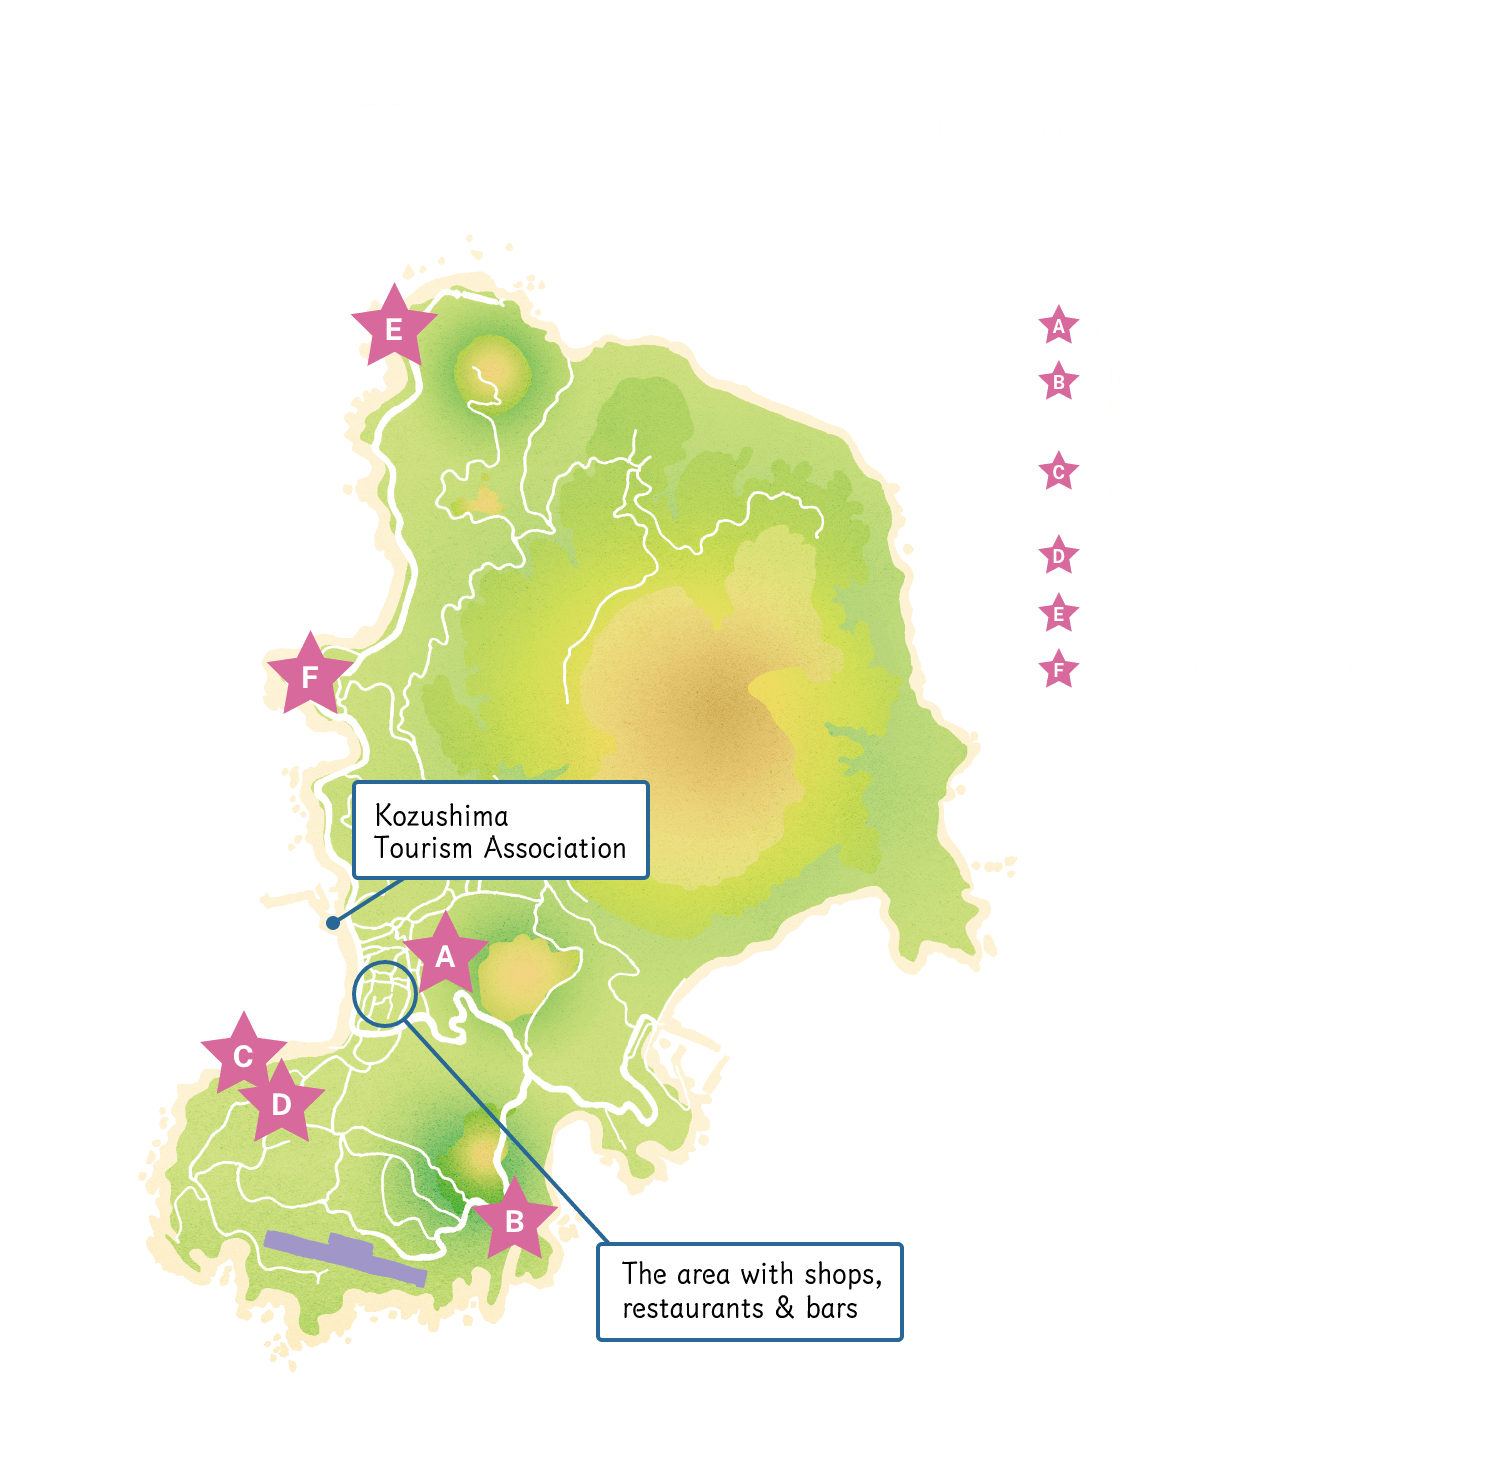 Kozushima stargazing map